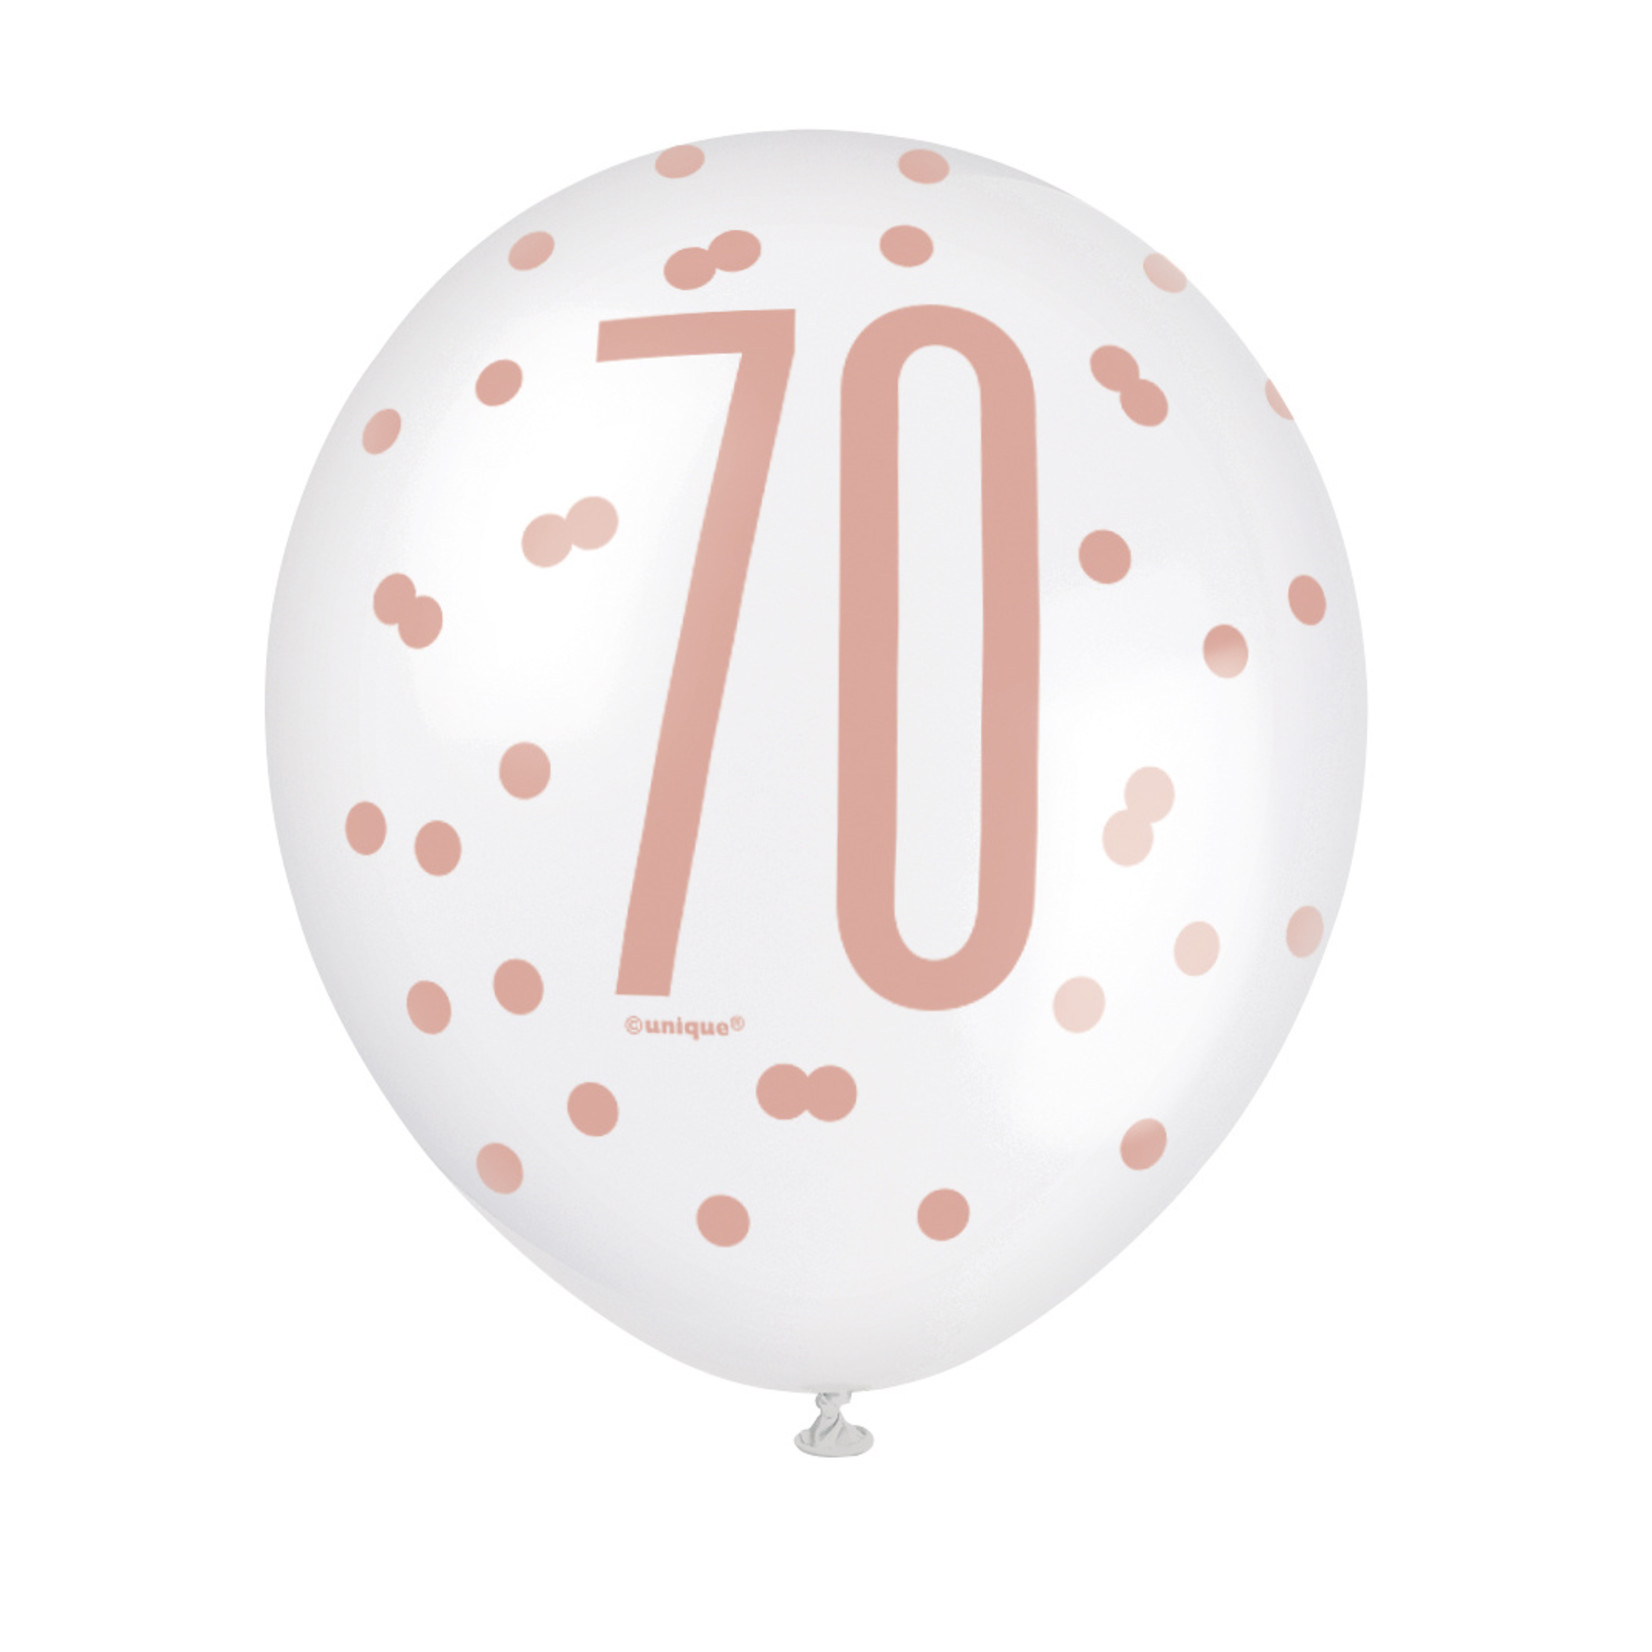 Balloons-Latex-70th Birthday-Glitz Rose Gold-6pk-12"